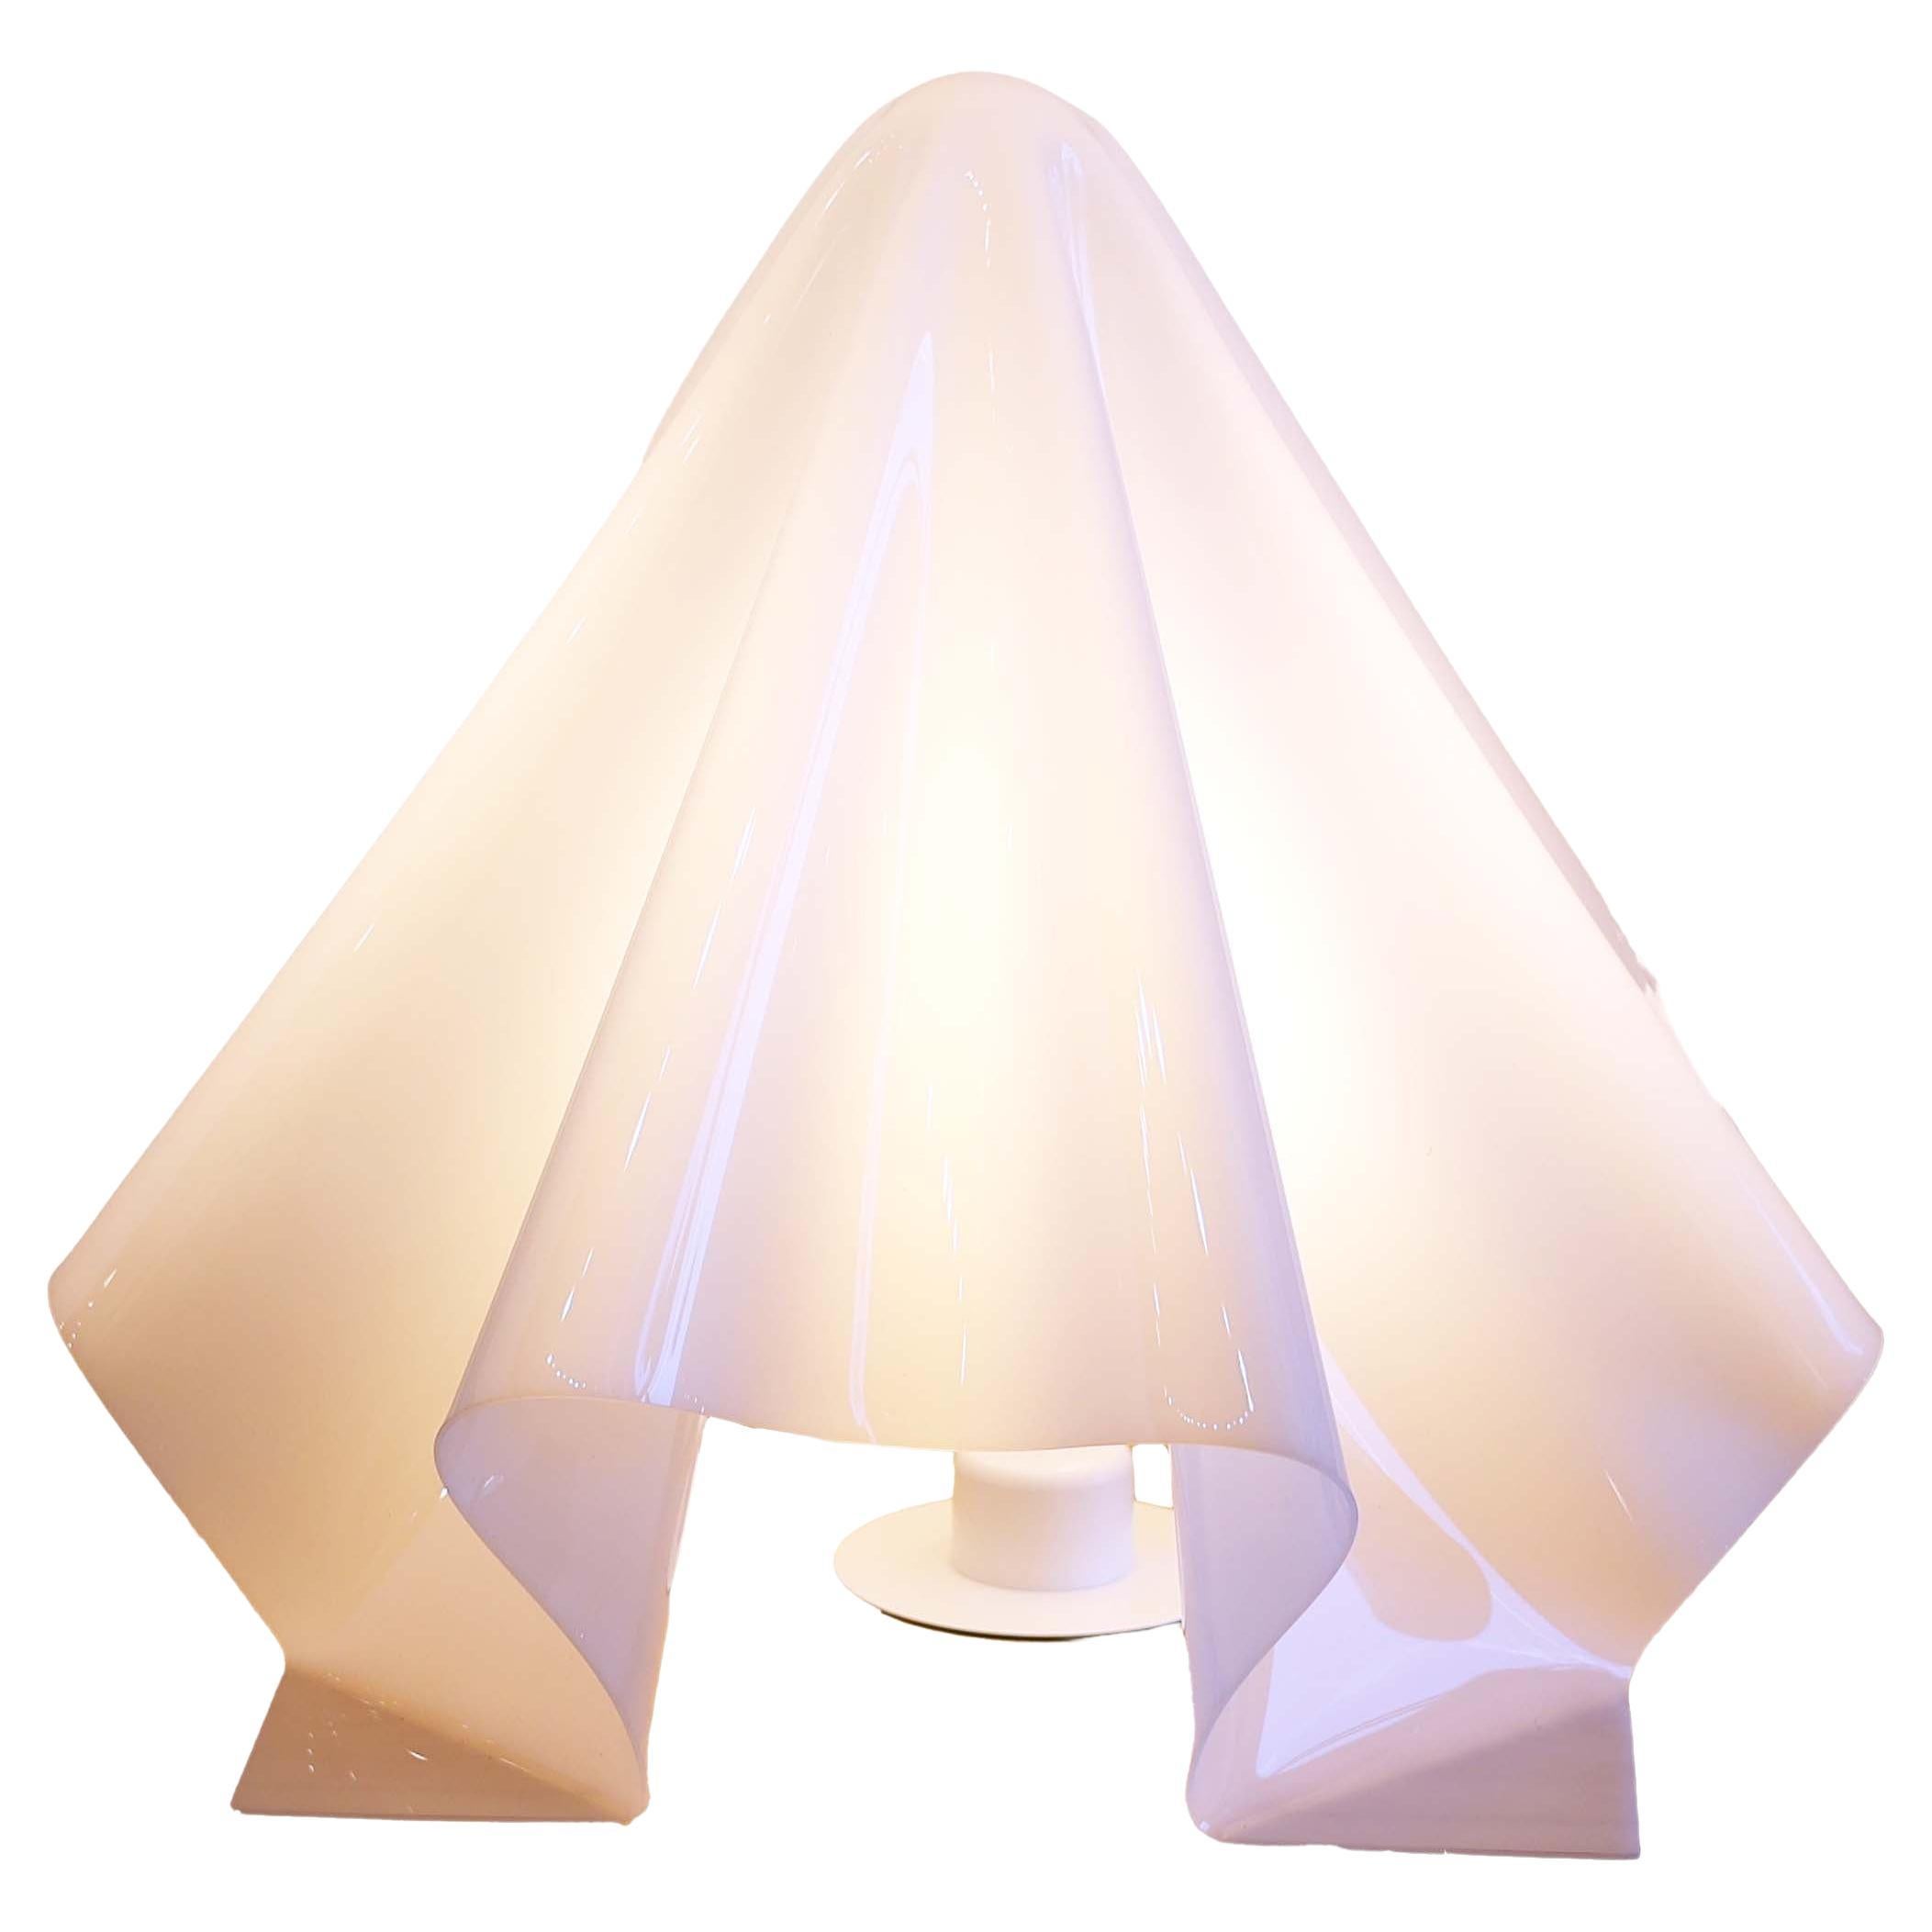 Oba-Q Ghost Lamp by Shiro Kuramata For Sale